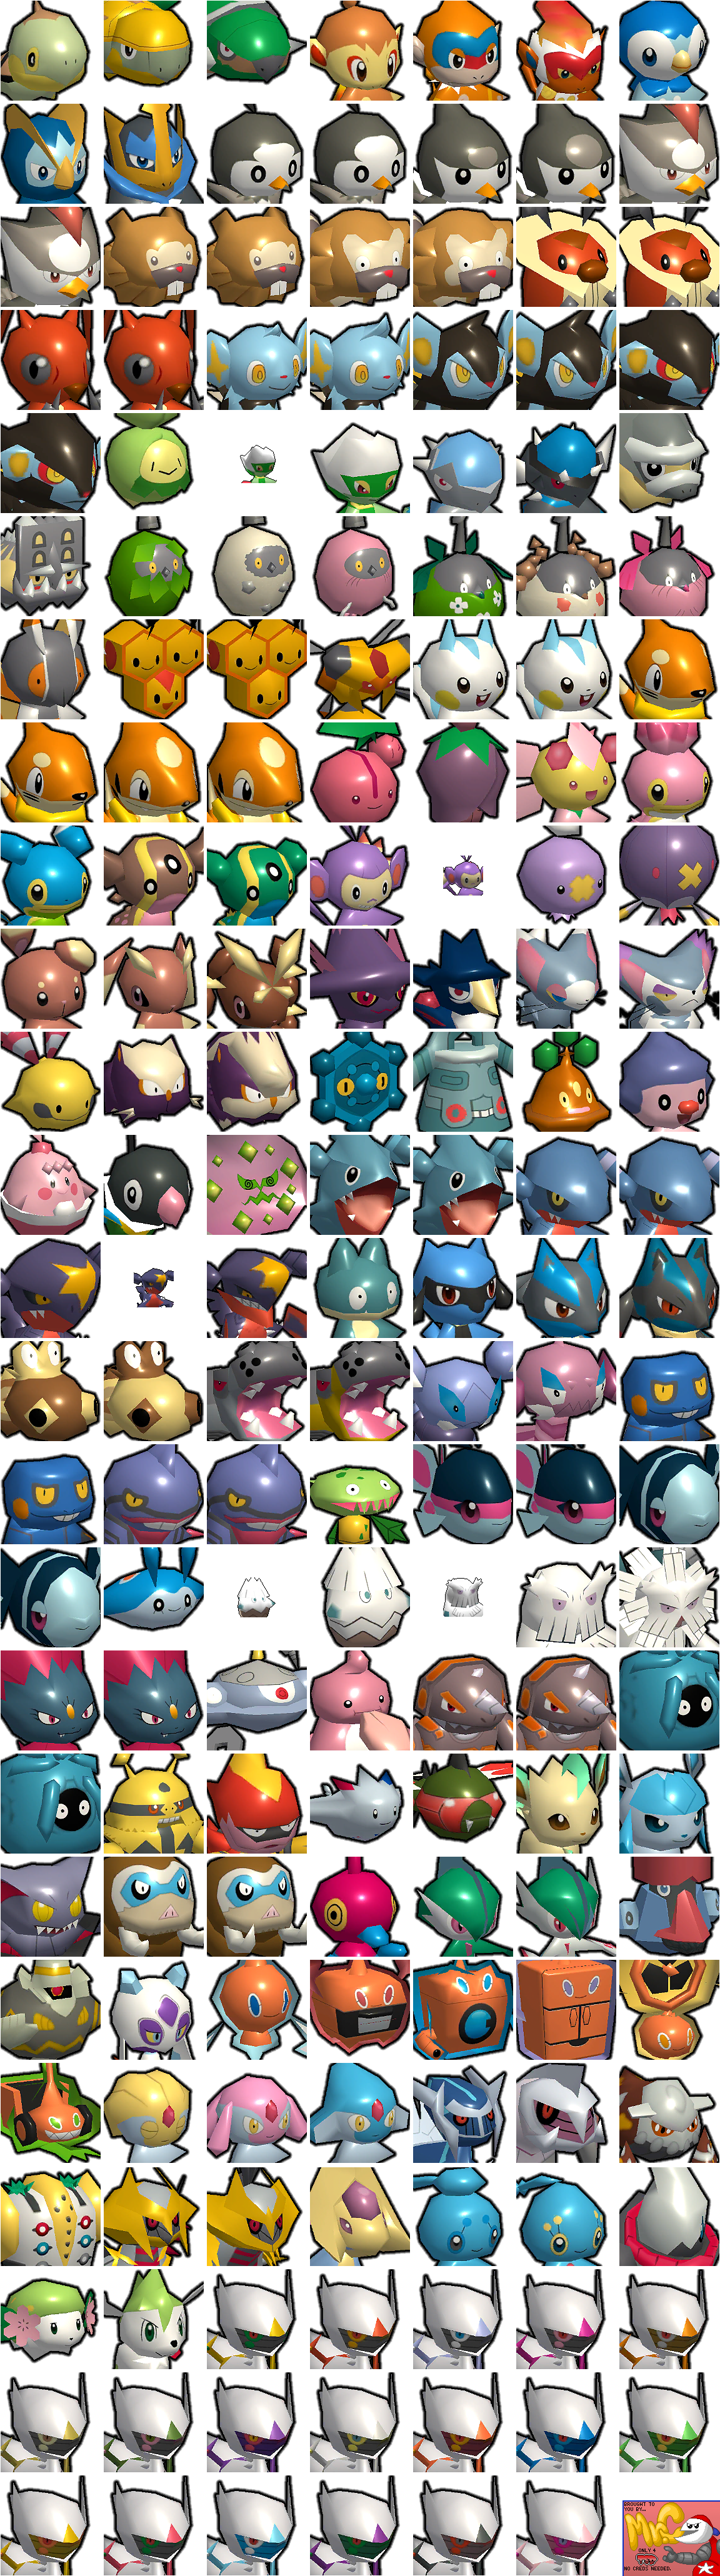 Pokémon Rumble Rush - Pokémon Icons (4th Generation)